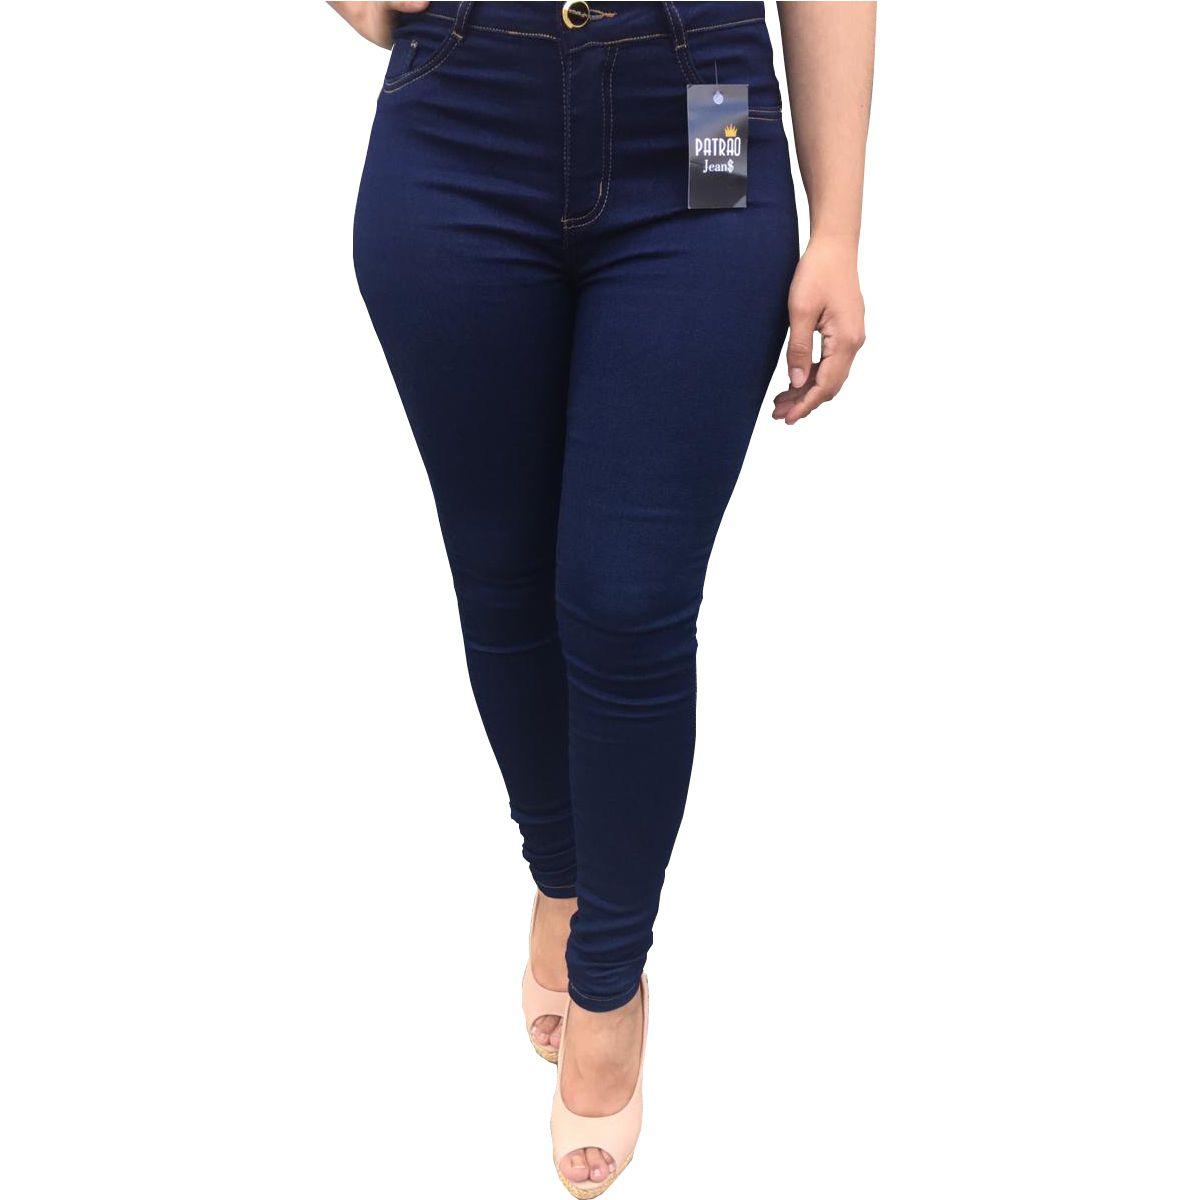 calça jeans feminina azul marinho